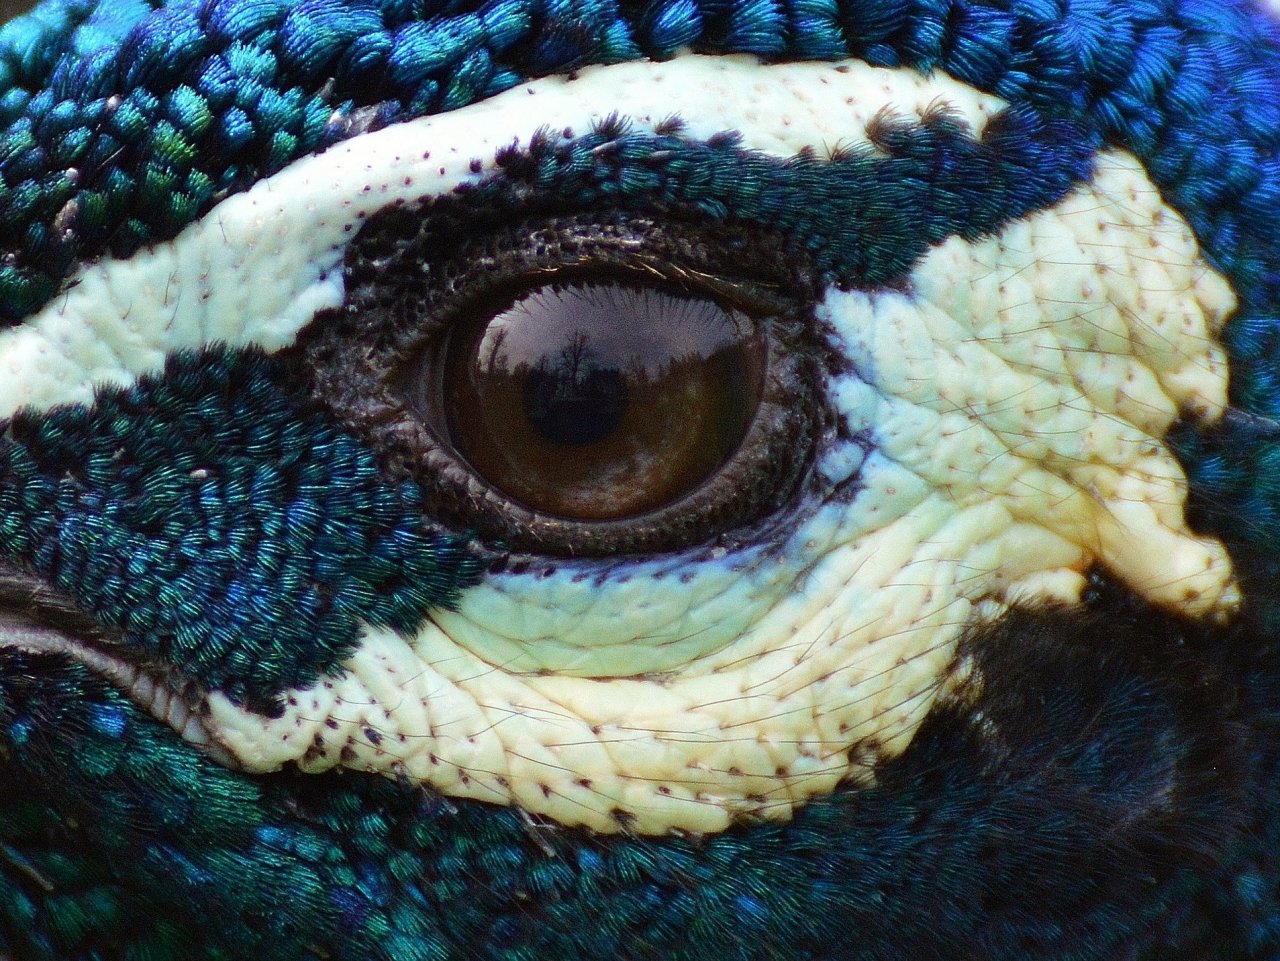 Peacock’s eye jigsaw puzzle